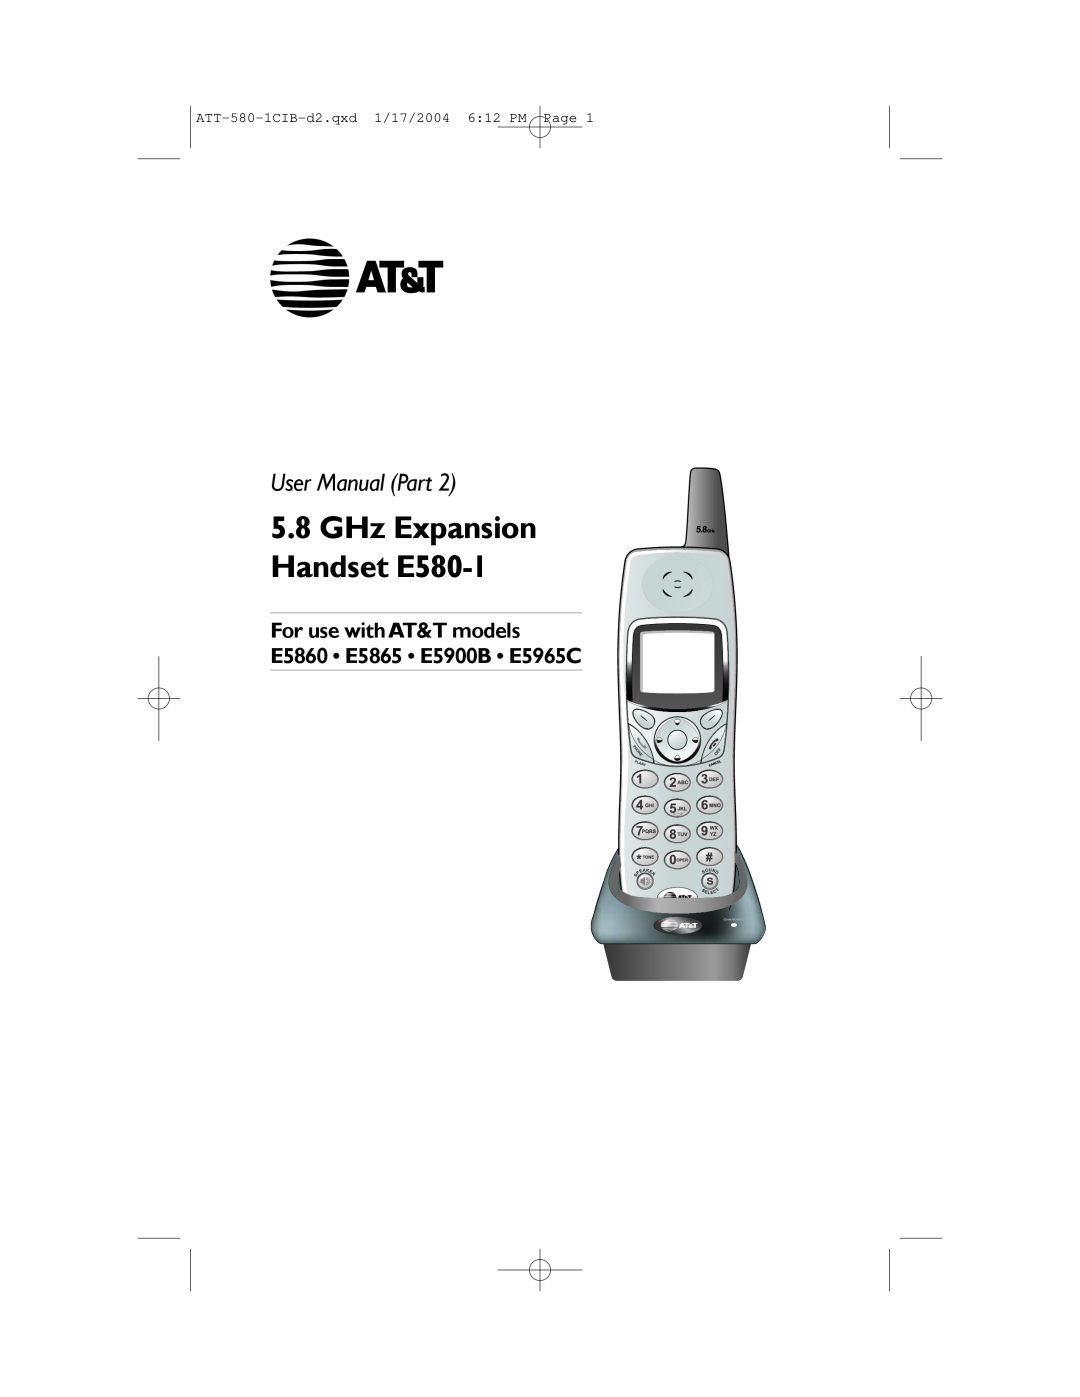 AT&T user manual GHz Expansion Handset E580-1, For use with AT&T models E5860 E5865 E5900B E5965C, User Manual Part 